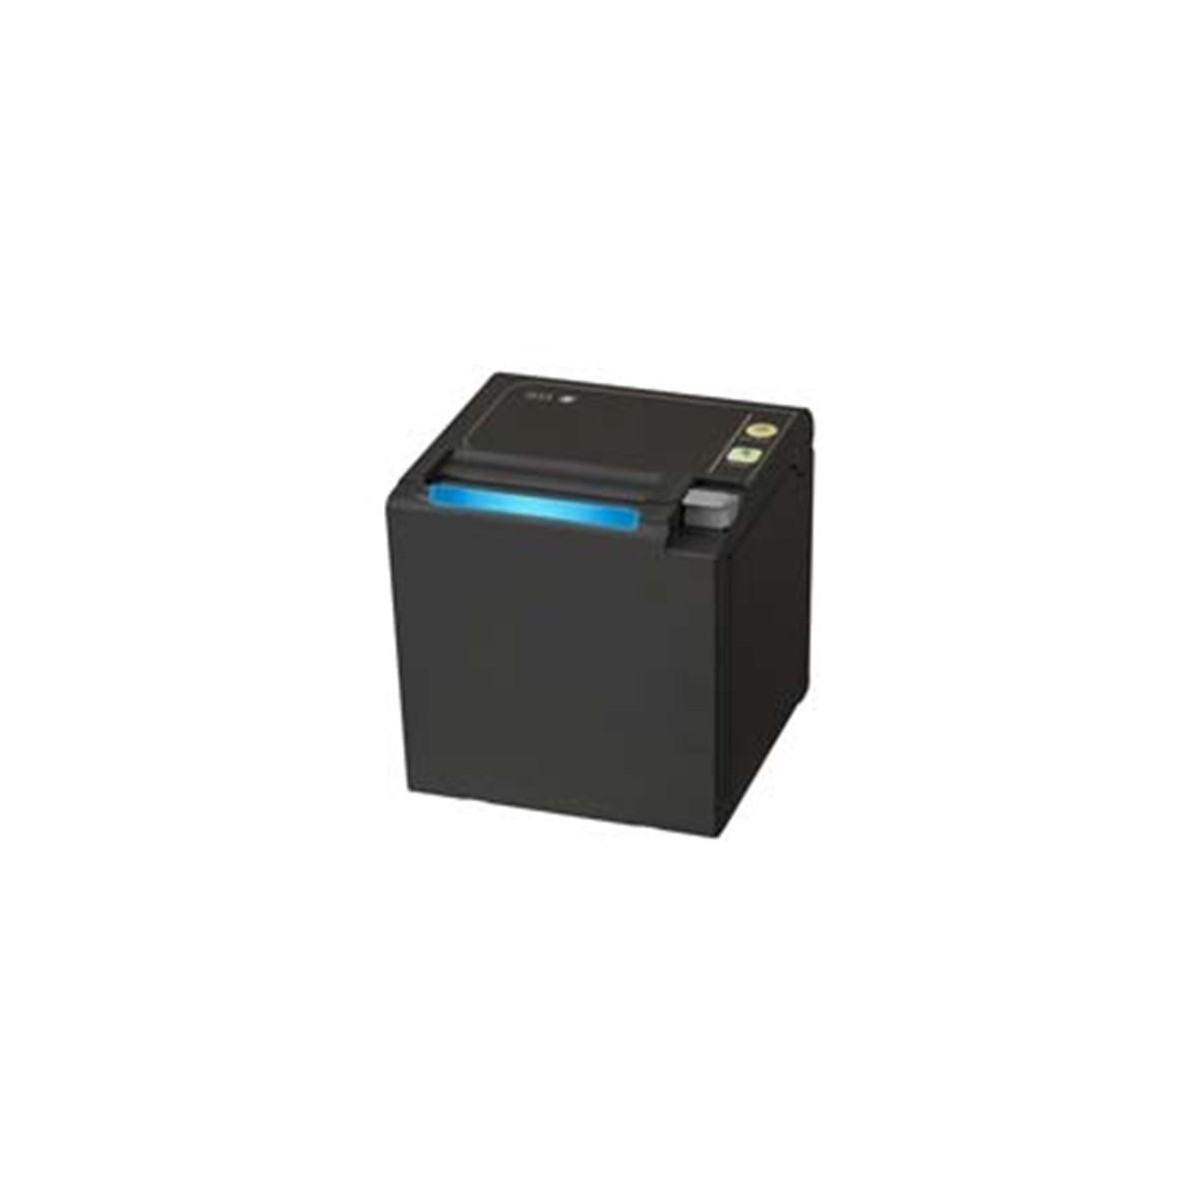 Seiko Instruments RP-E10-K3FJ1-S-C5 - Thermal - POS printer - 203 x 203 DPI - 350 mm/sec - 8.3 cm - 58 mm